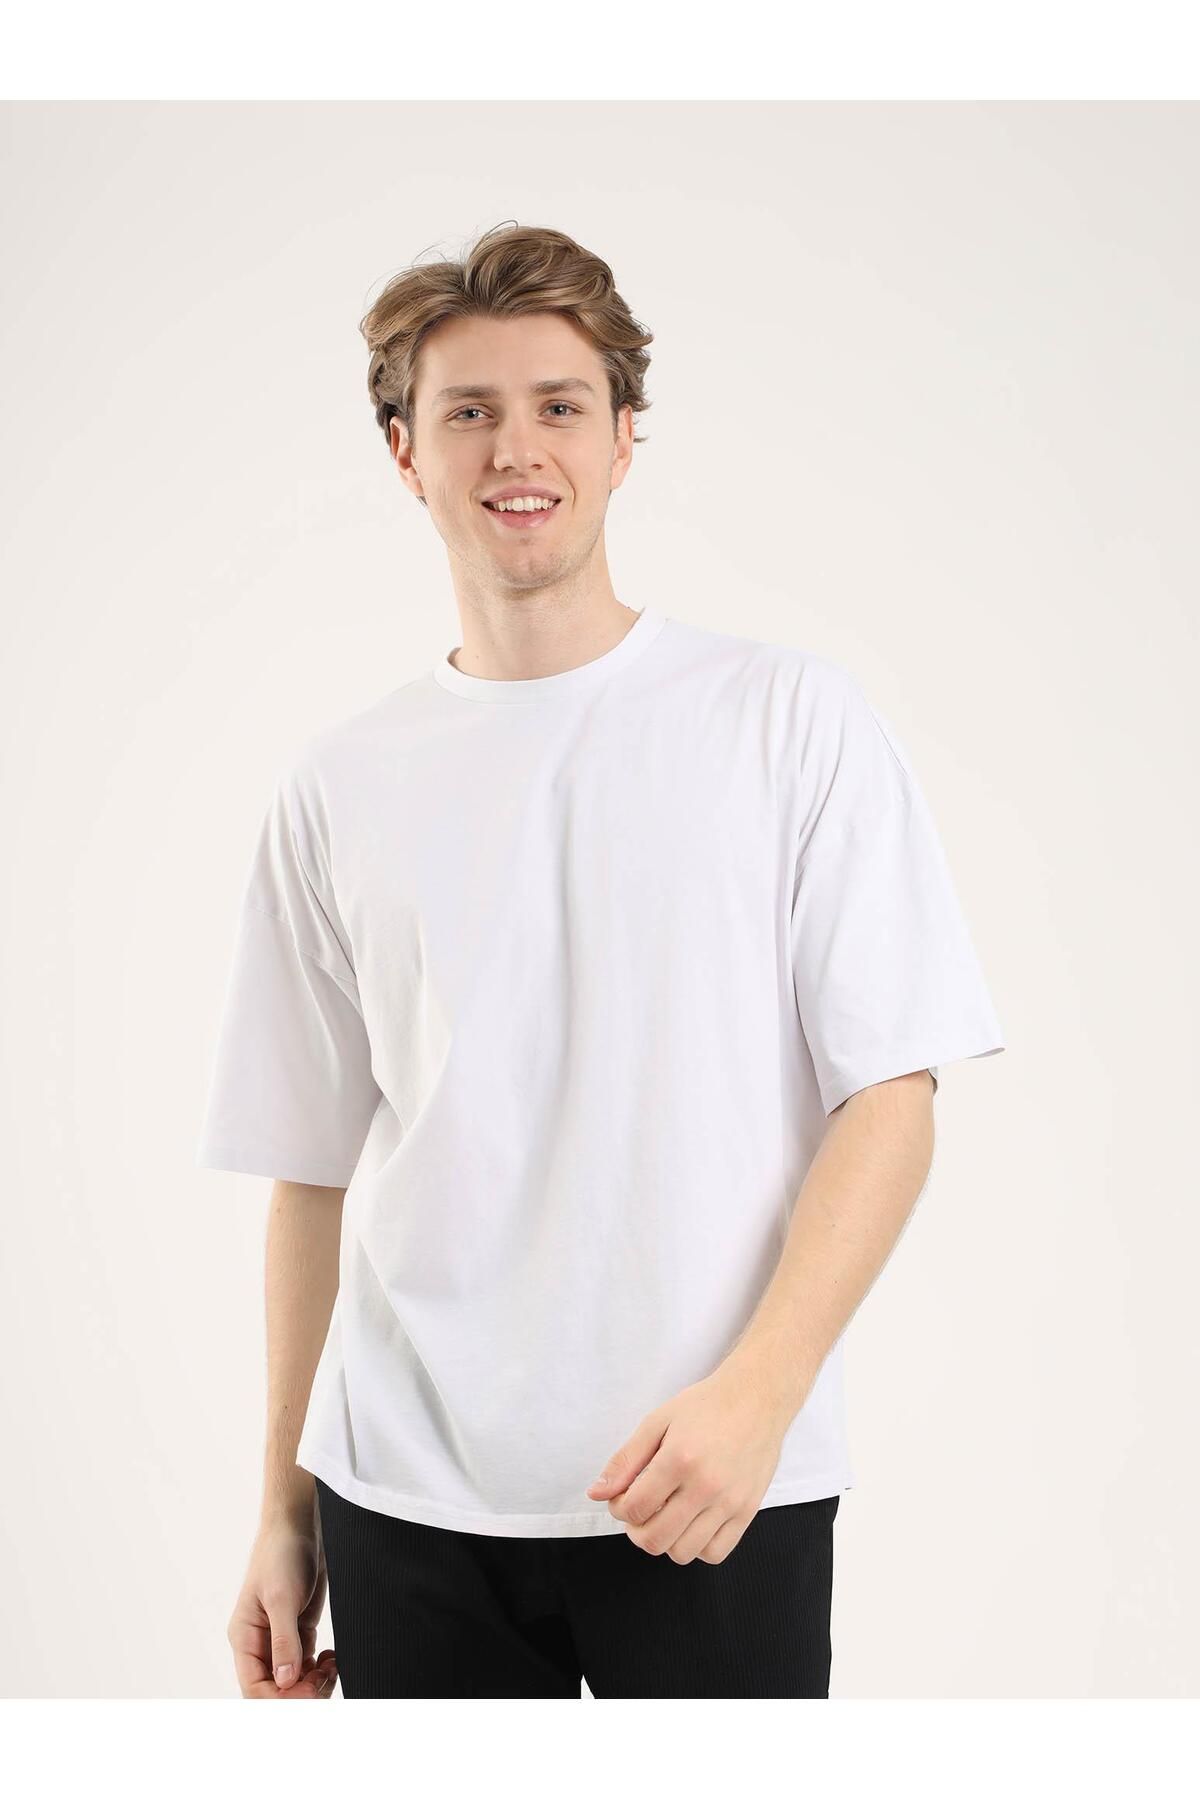 Dufy Taş Erkek Oversize Düz Pamuklu Bisiklet Yaka Tshirt - 89410